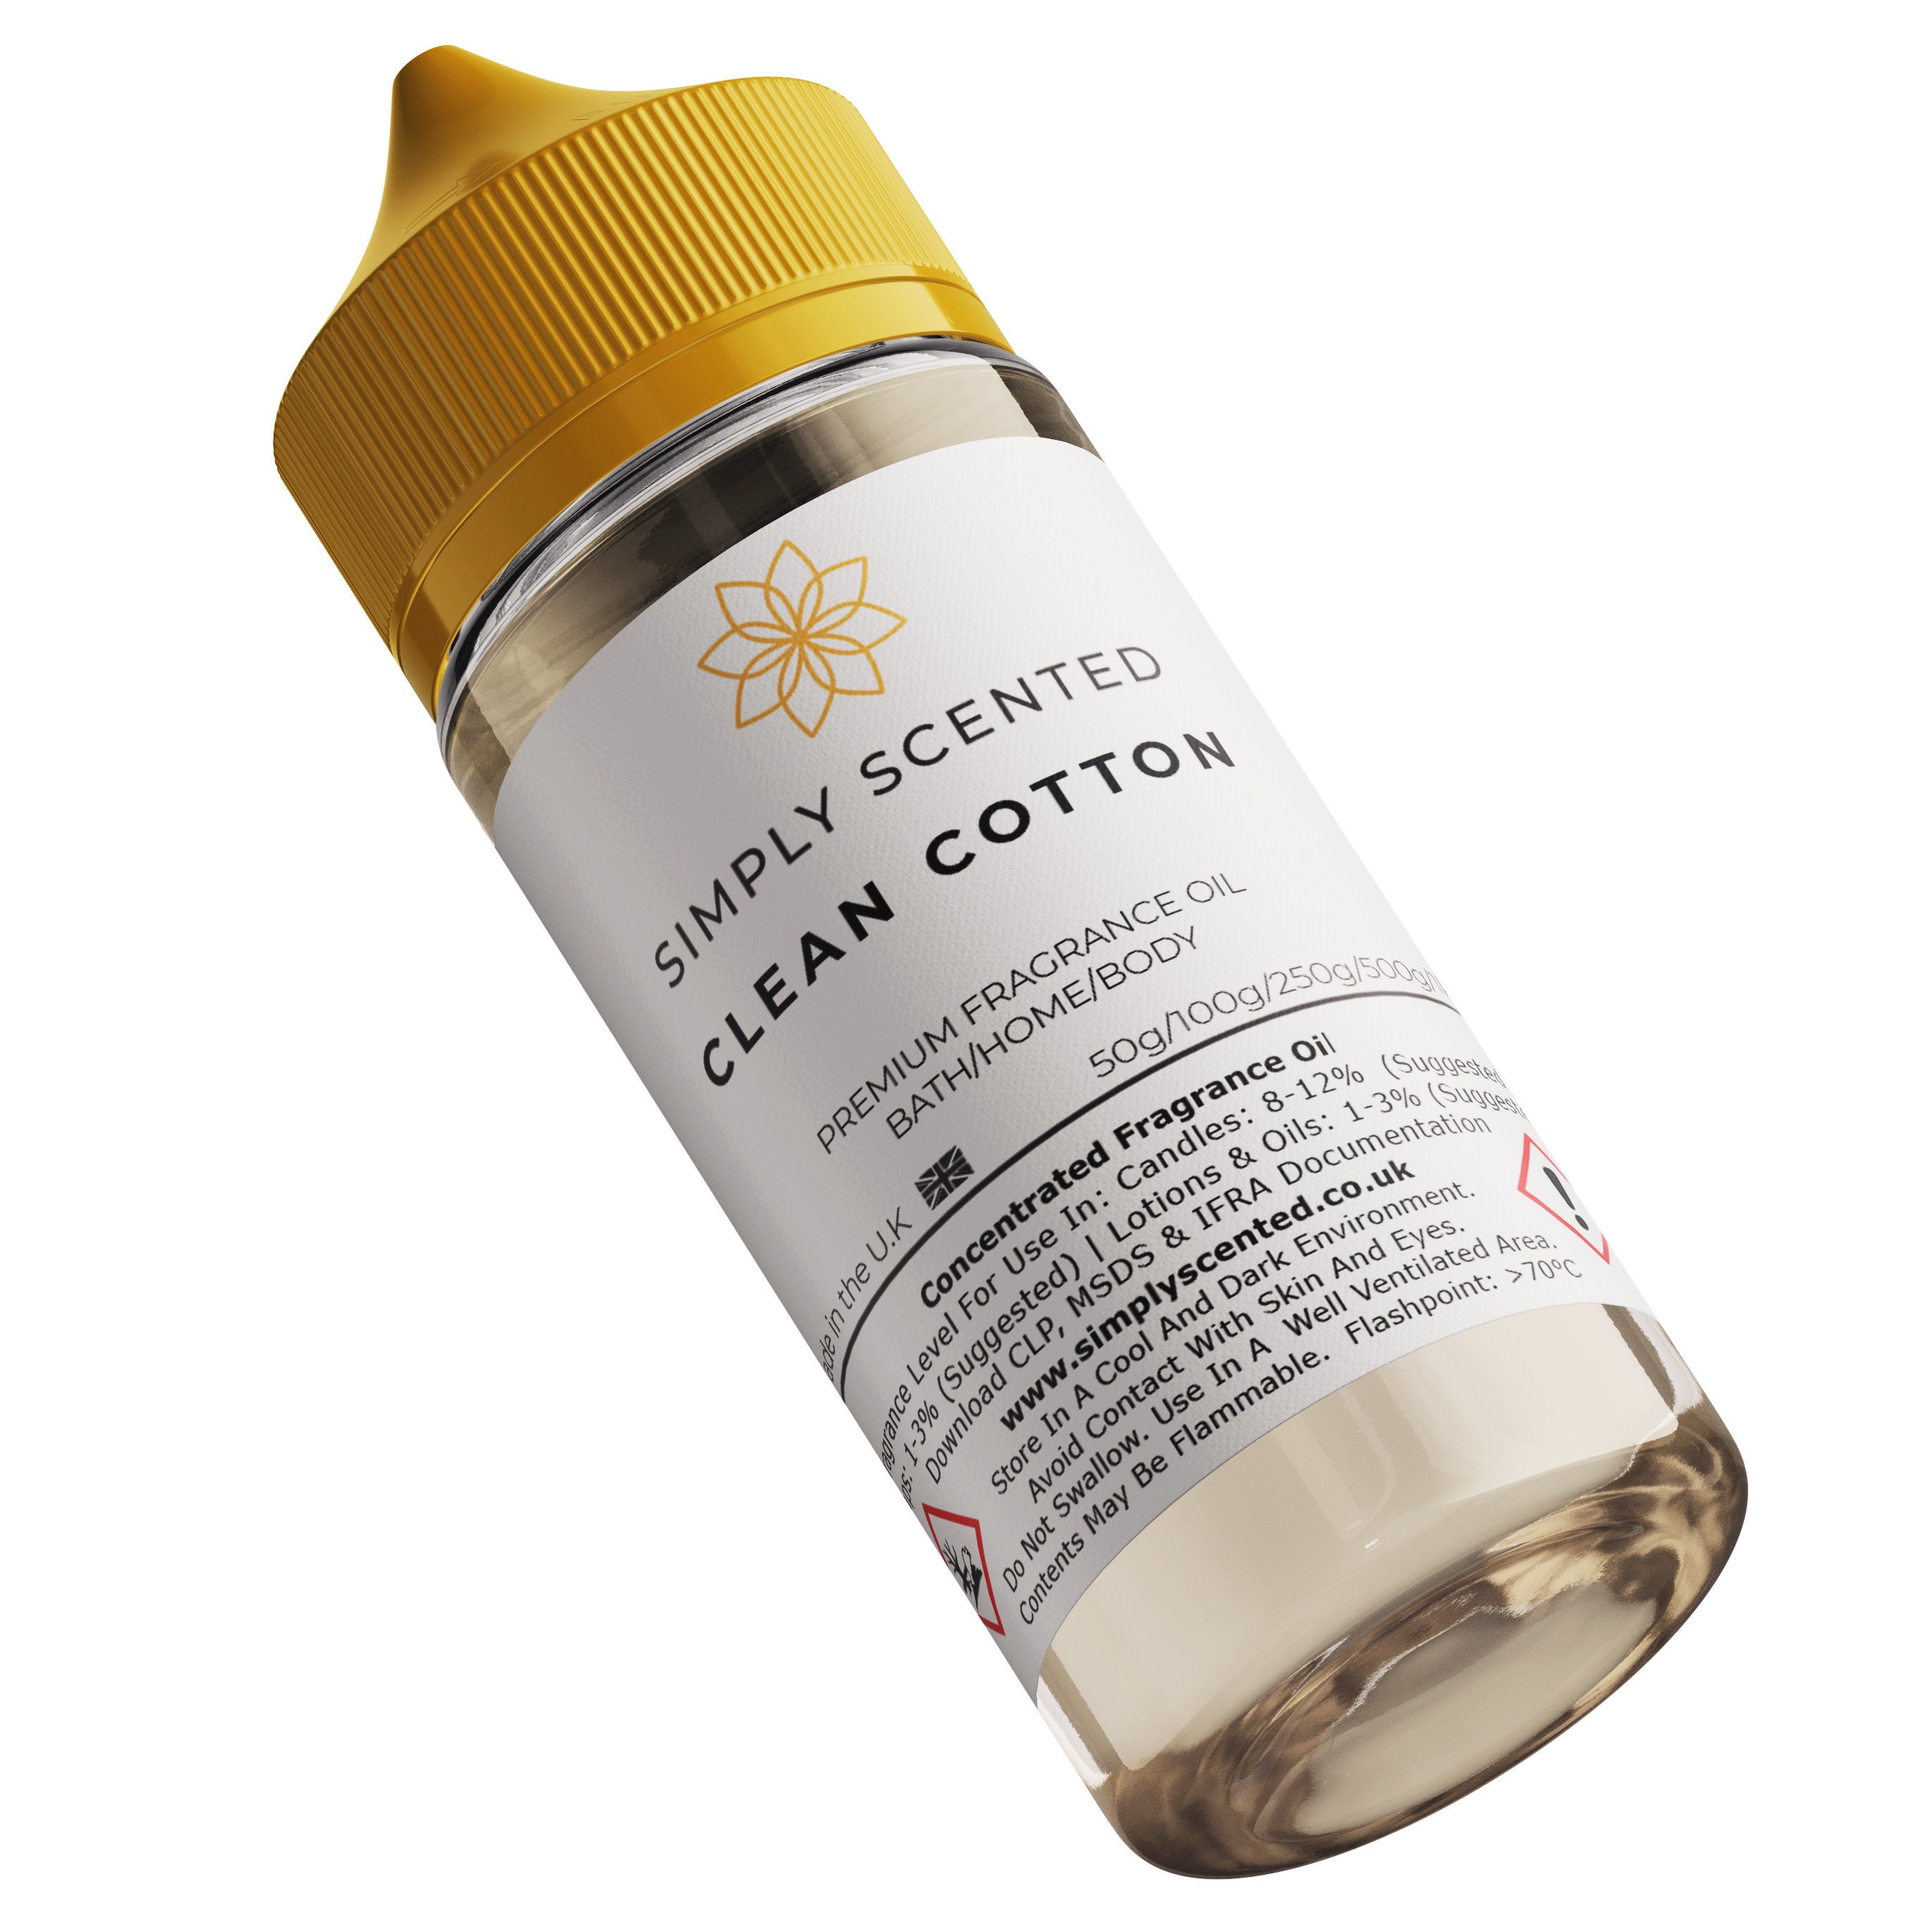 Clean Cotton Fragrance Oil